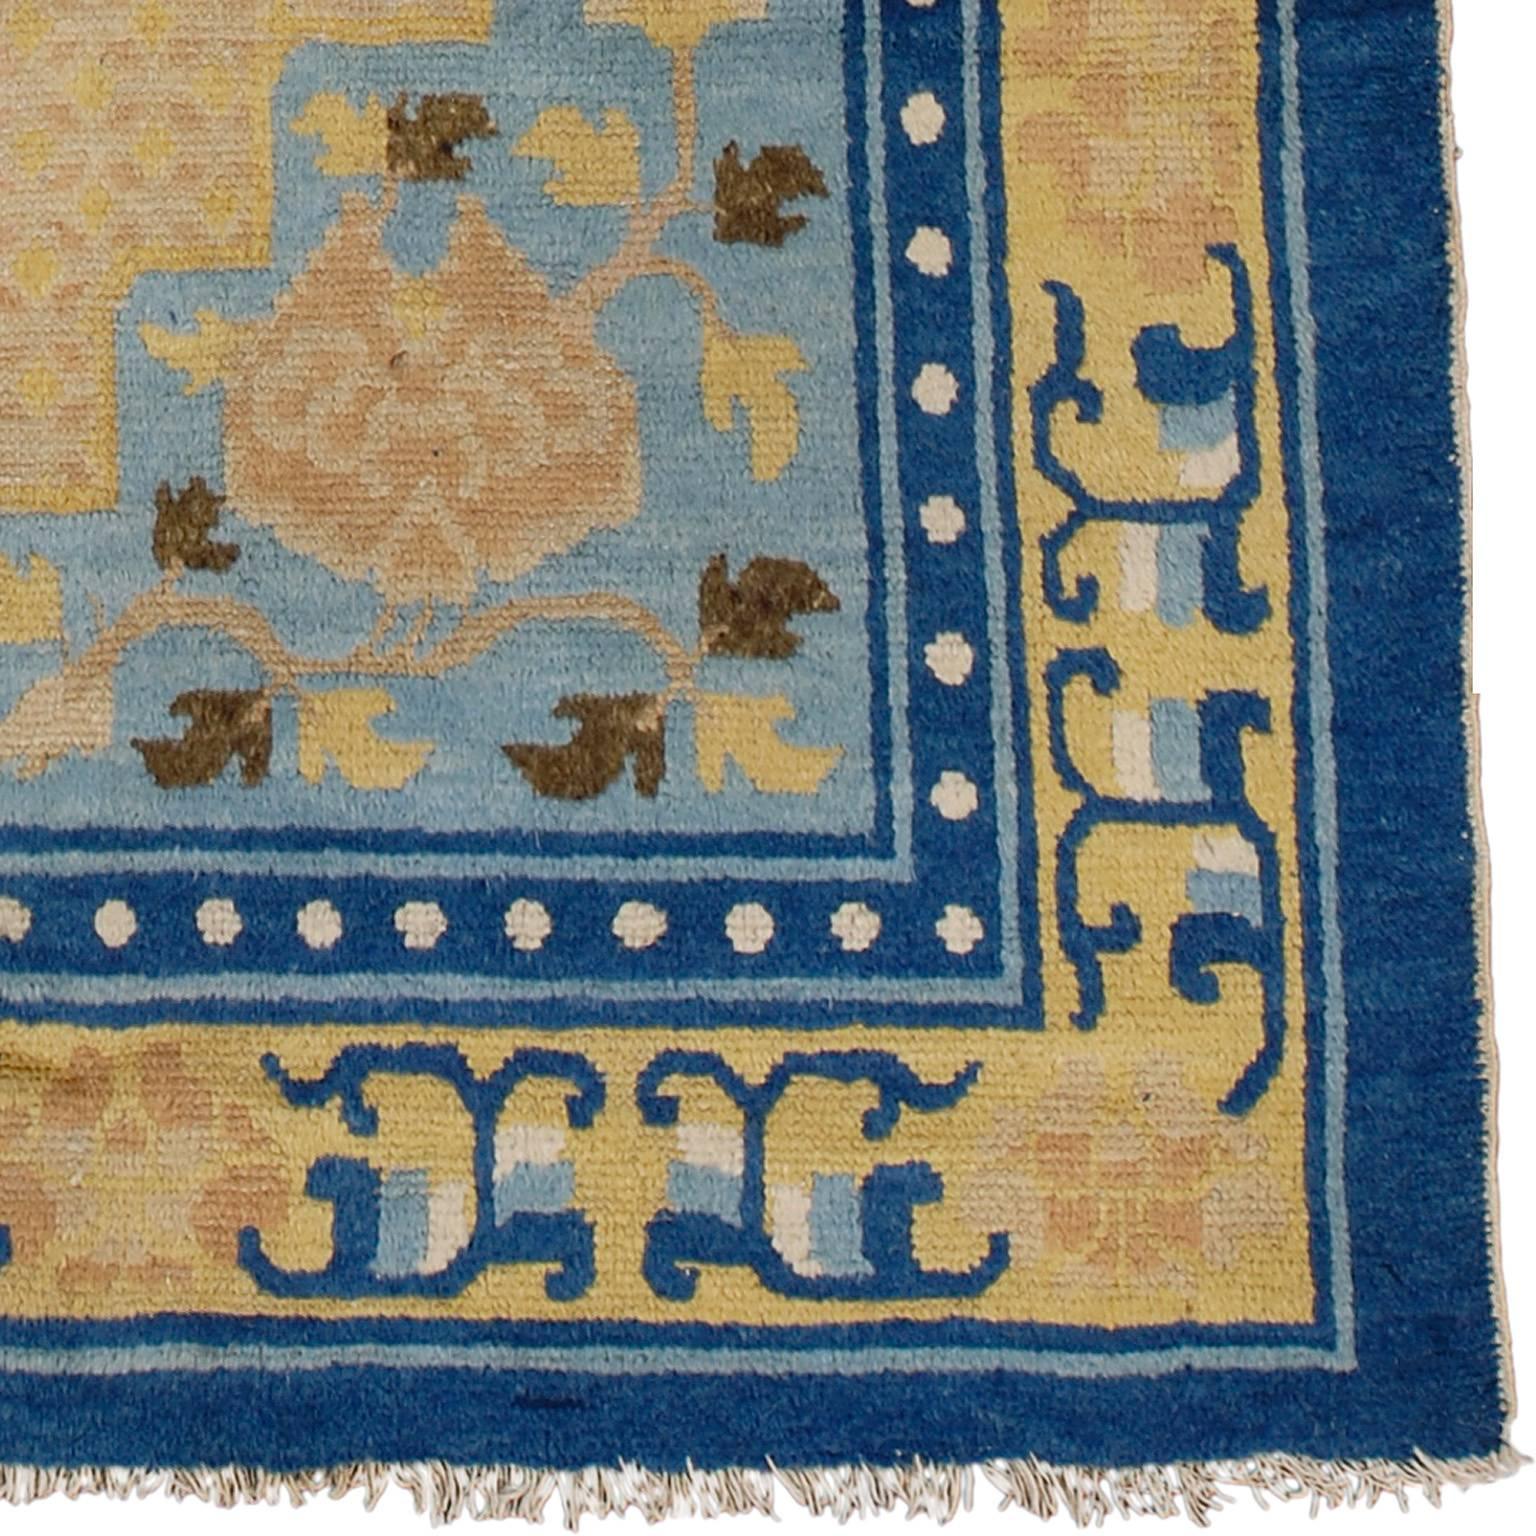 Early 19th century Ning Xia carpet.